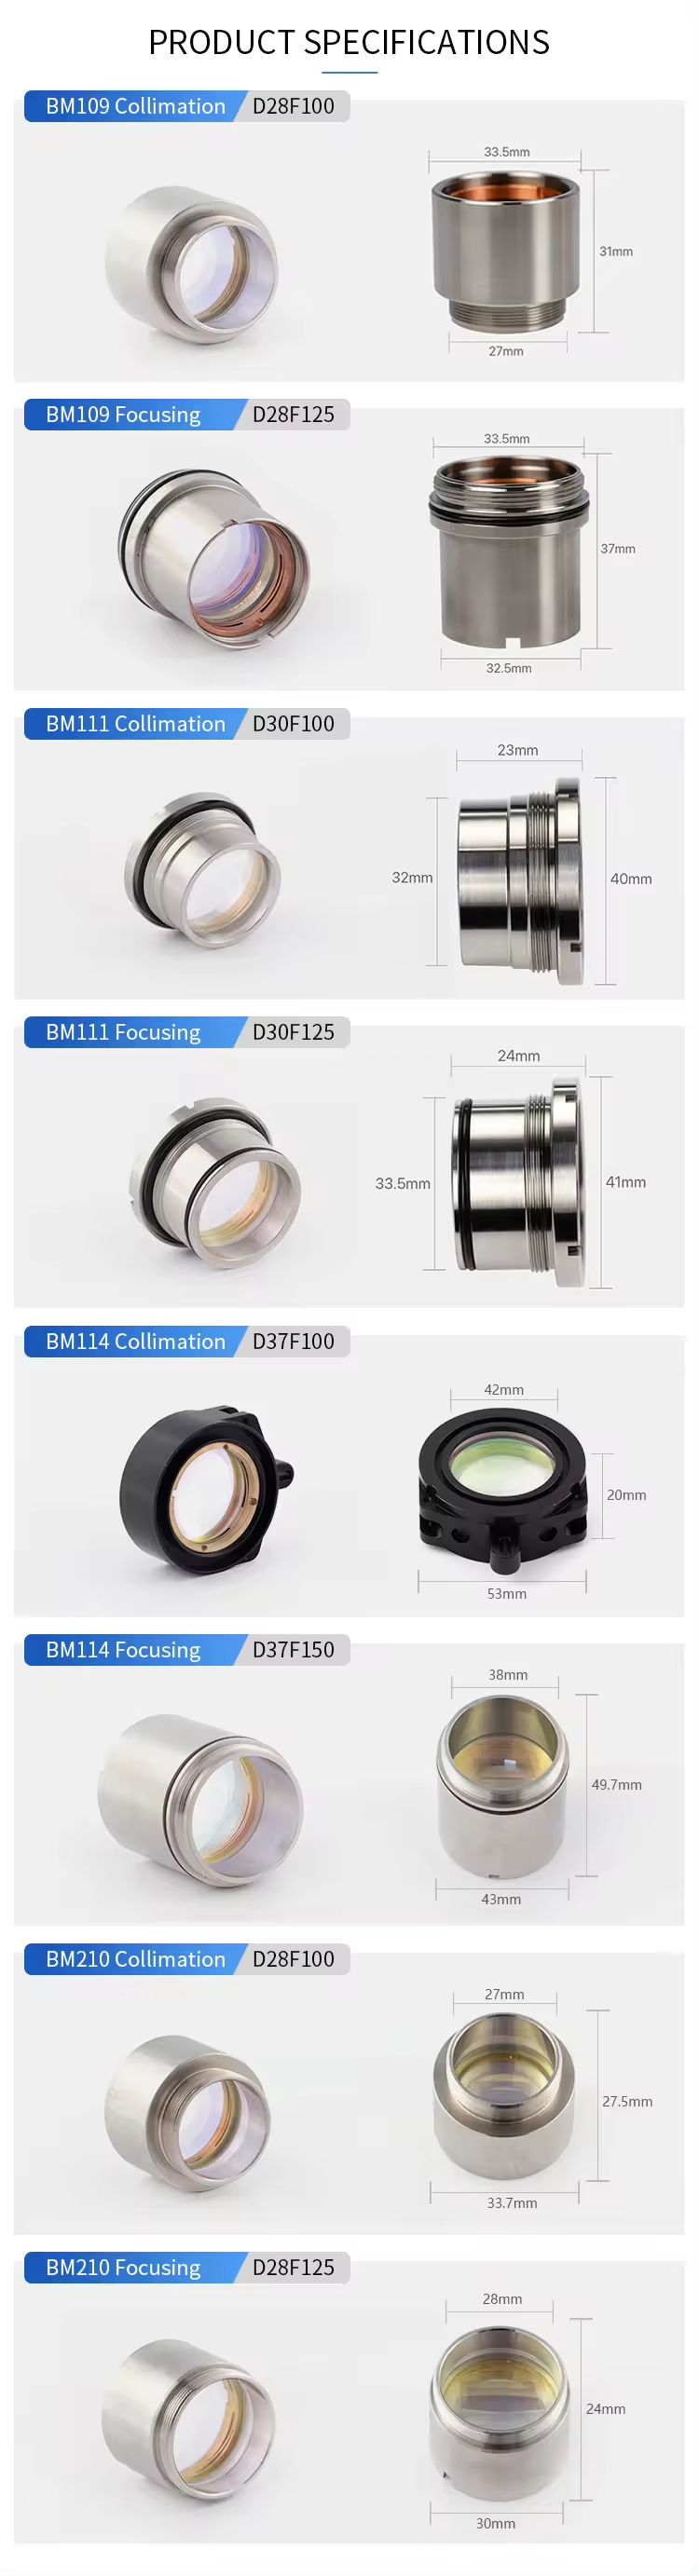 ZP raytools set BM114 laser head genuine collimation focusing lens holder